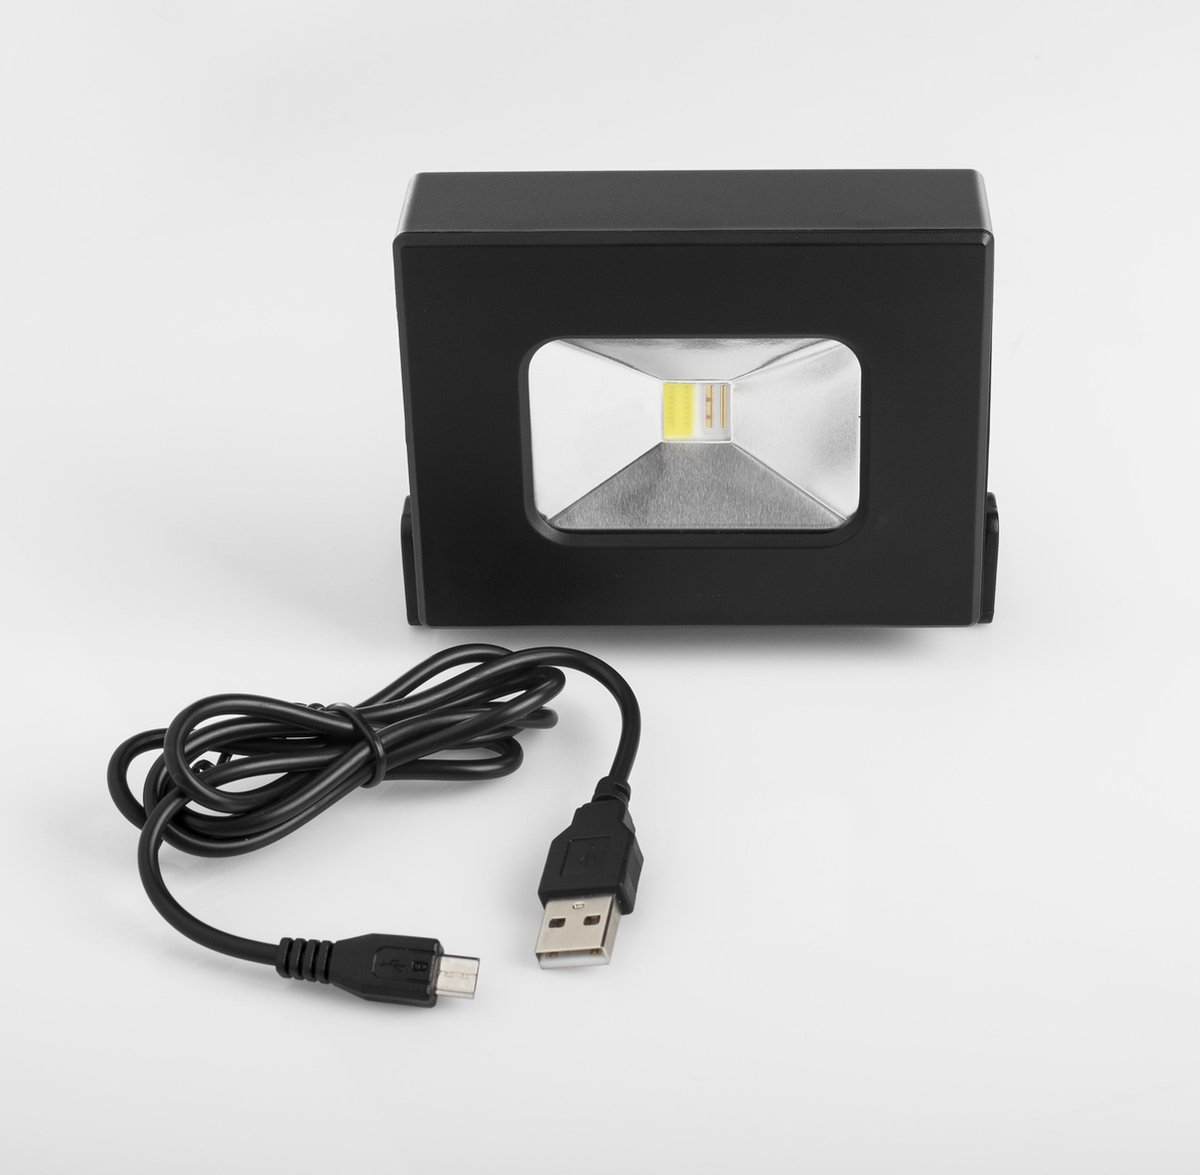 Smartwares LED rechargeable pocket light FCL-76001